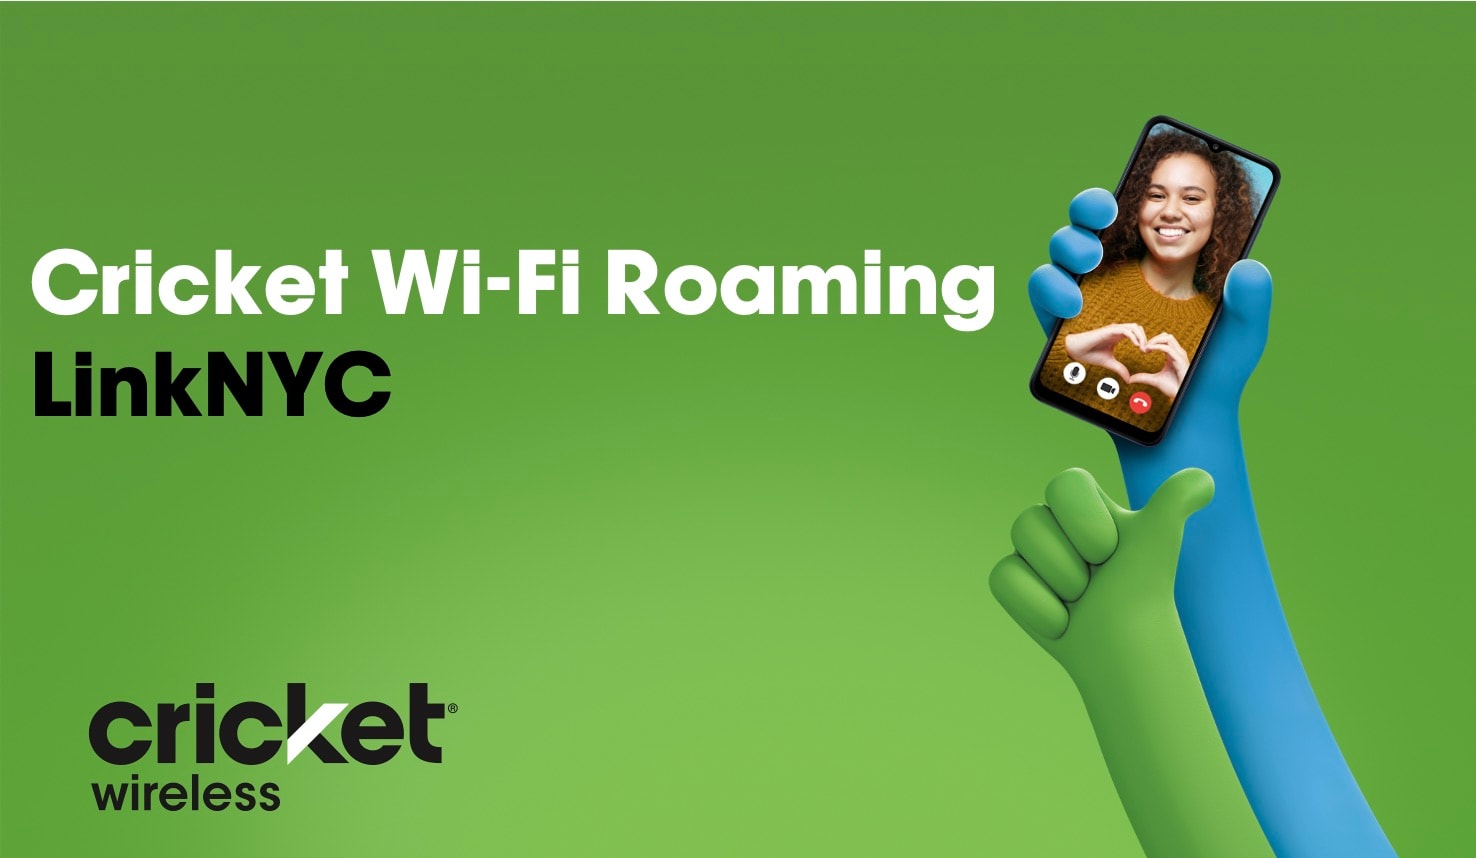 Cricket Wi-Fi Roaming with LinkNYC